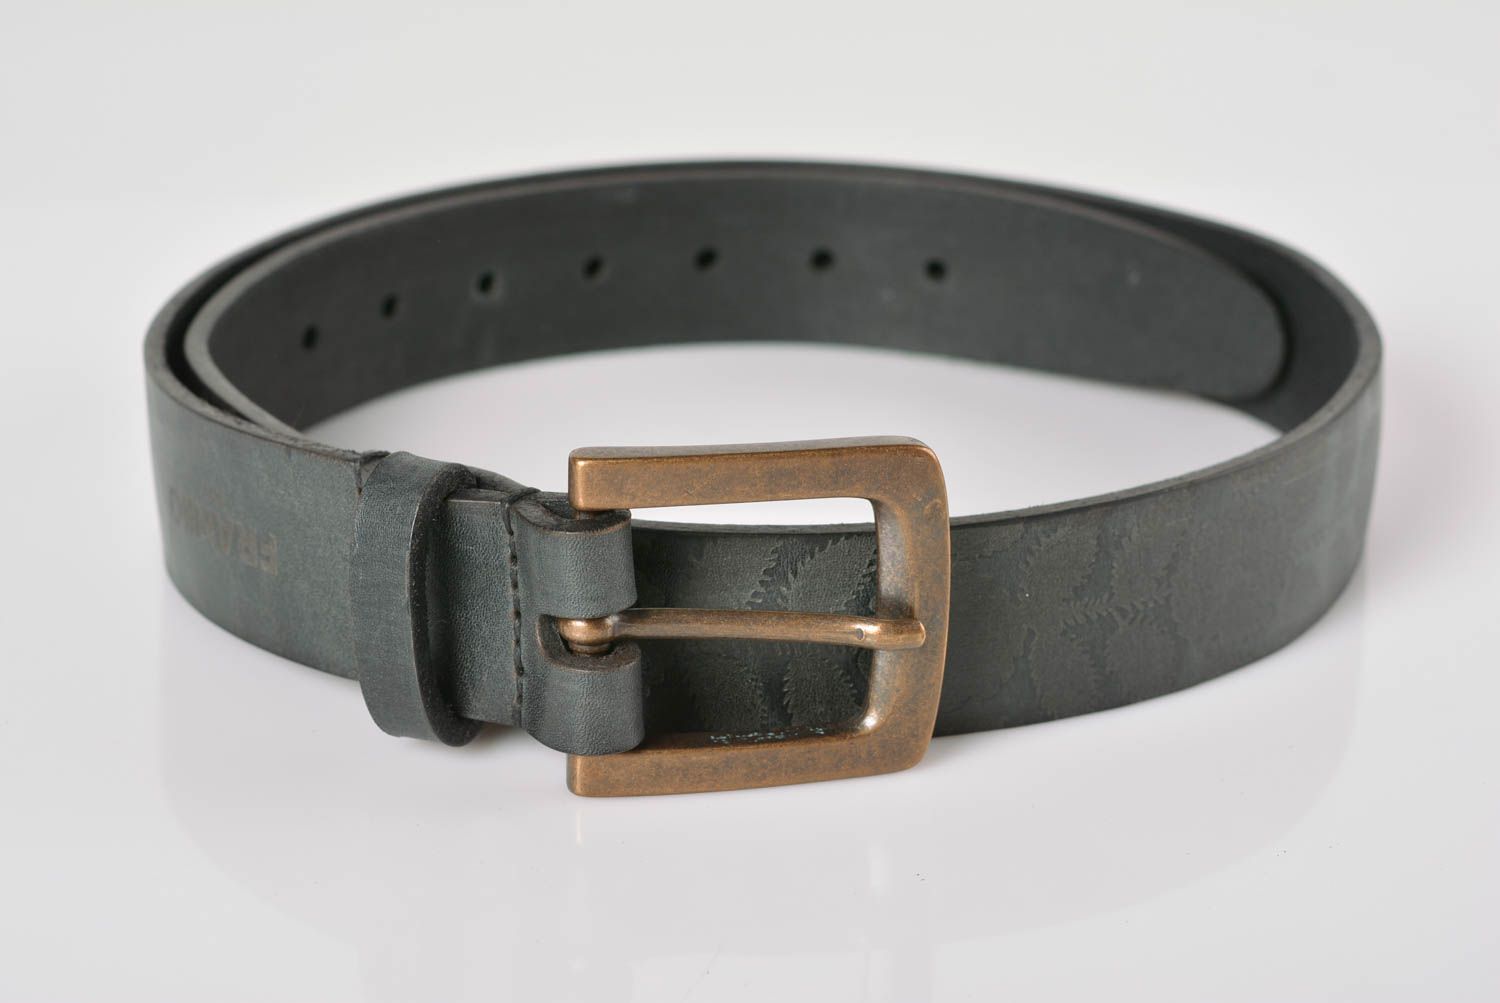 Handmade leather belt designer belts fashion accessories gifts for men photo 1